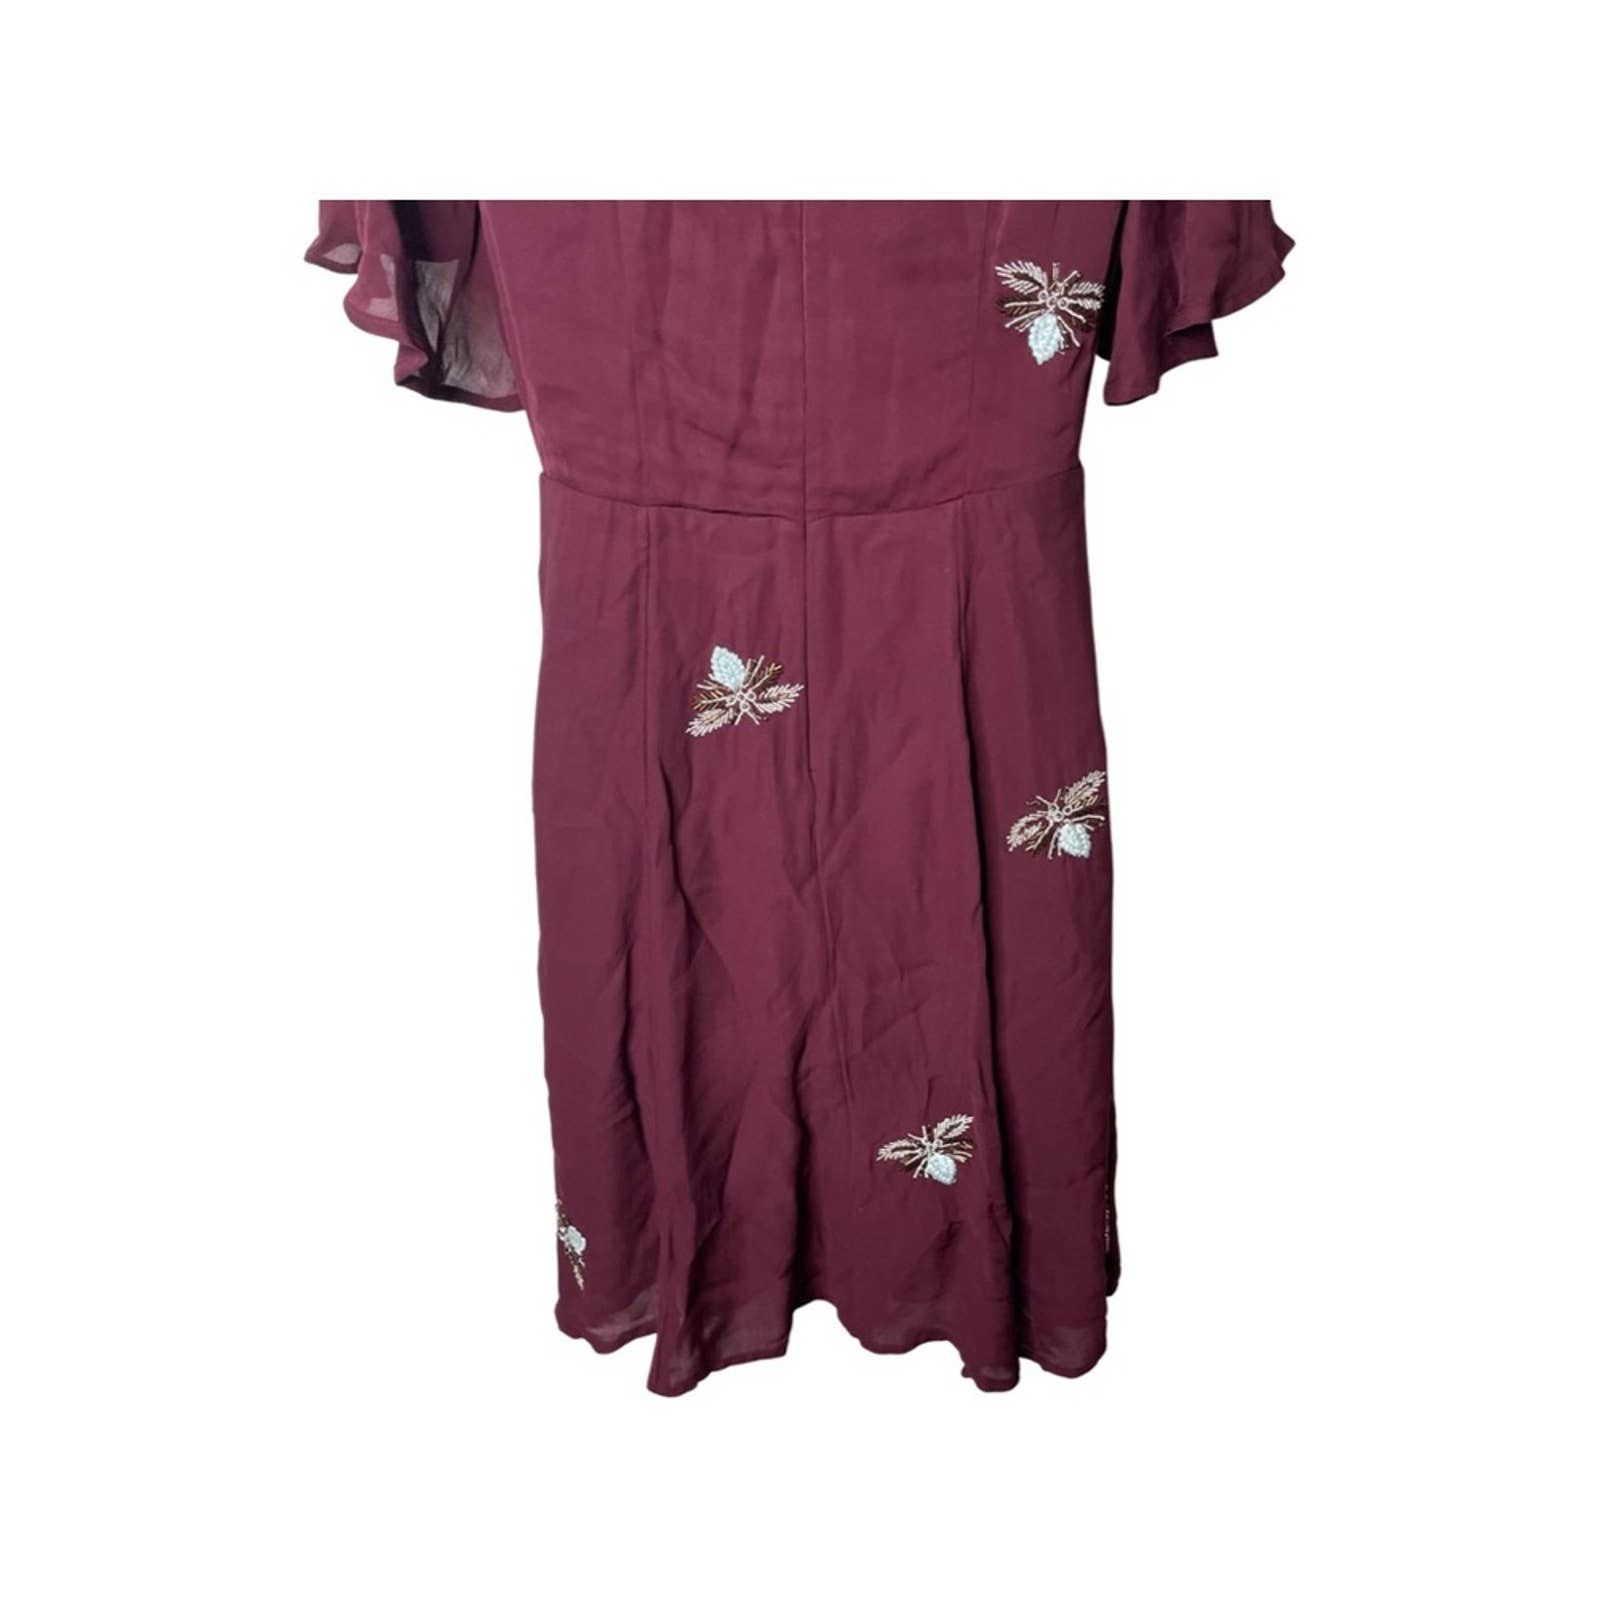 Anthropologie Anthropologi Moulinette Soeurs Burgundy Beaded Firefly Dress Size XS / US 0-2 / IT 36-38 - 4 Thumbnail